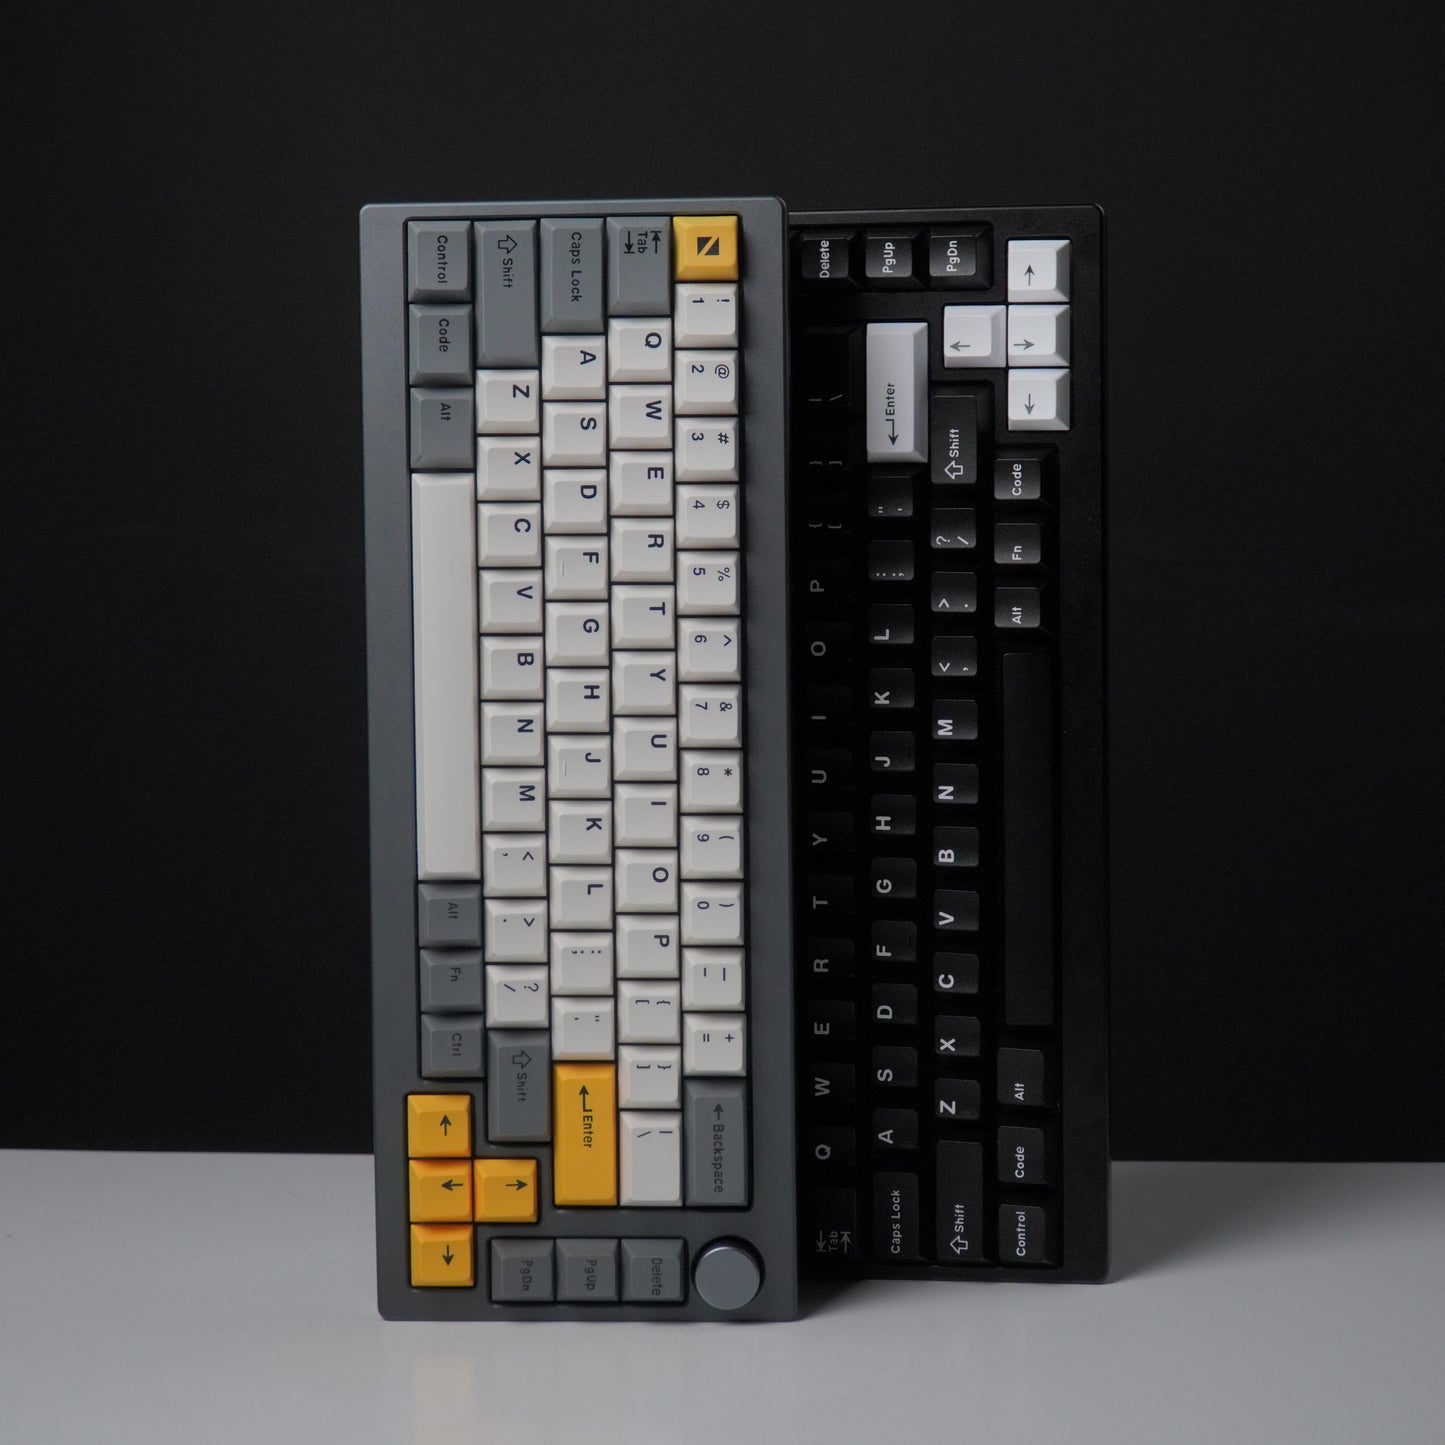 Noir Z1 Aluminum Custom Mechanical Keyboard